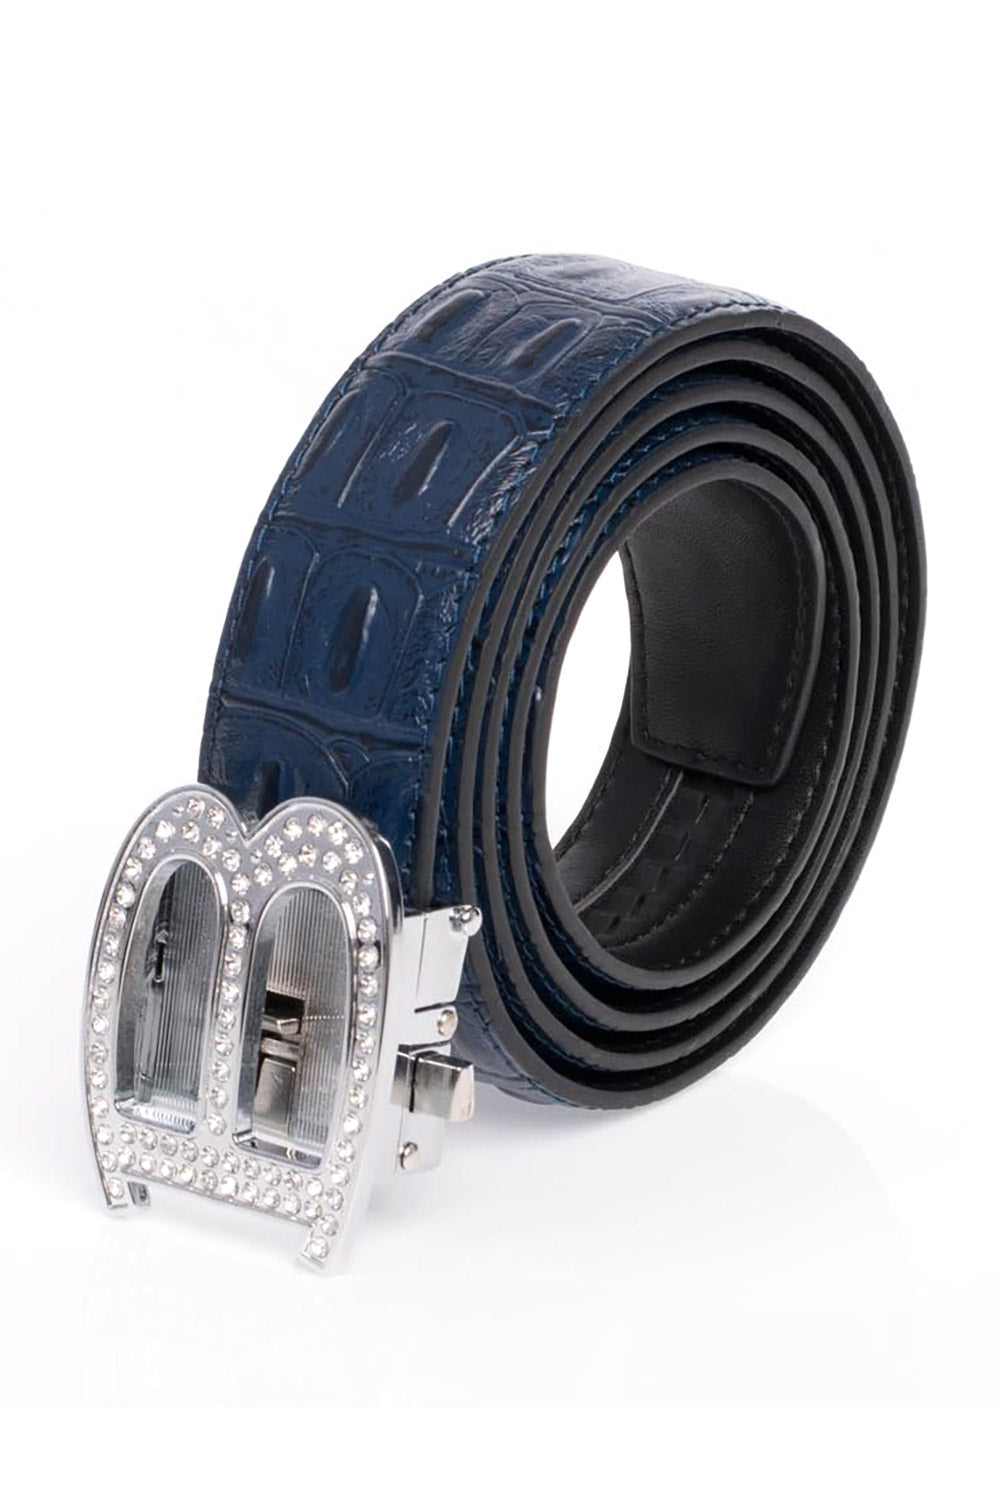 Barabas "B" Shiny Silver/Blue Croc Adjustable Luxury Leather Dress Belt - Dudes Boutique